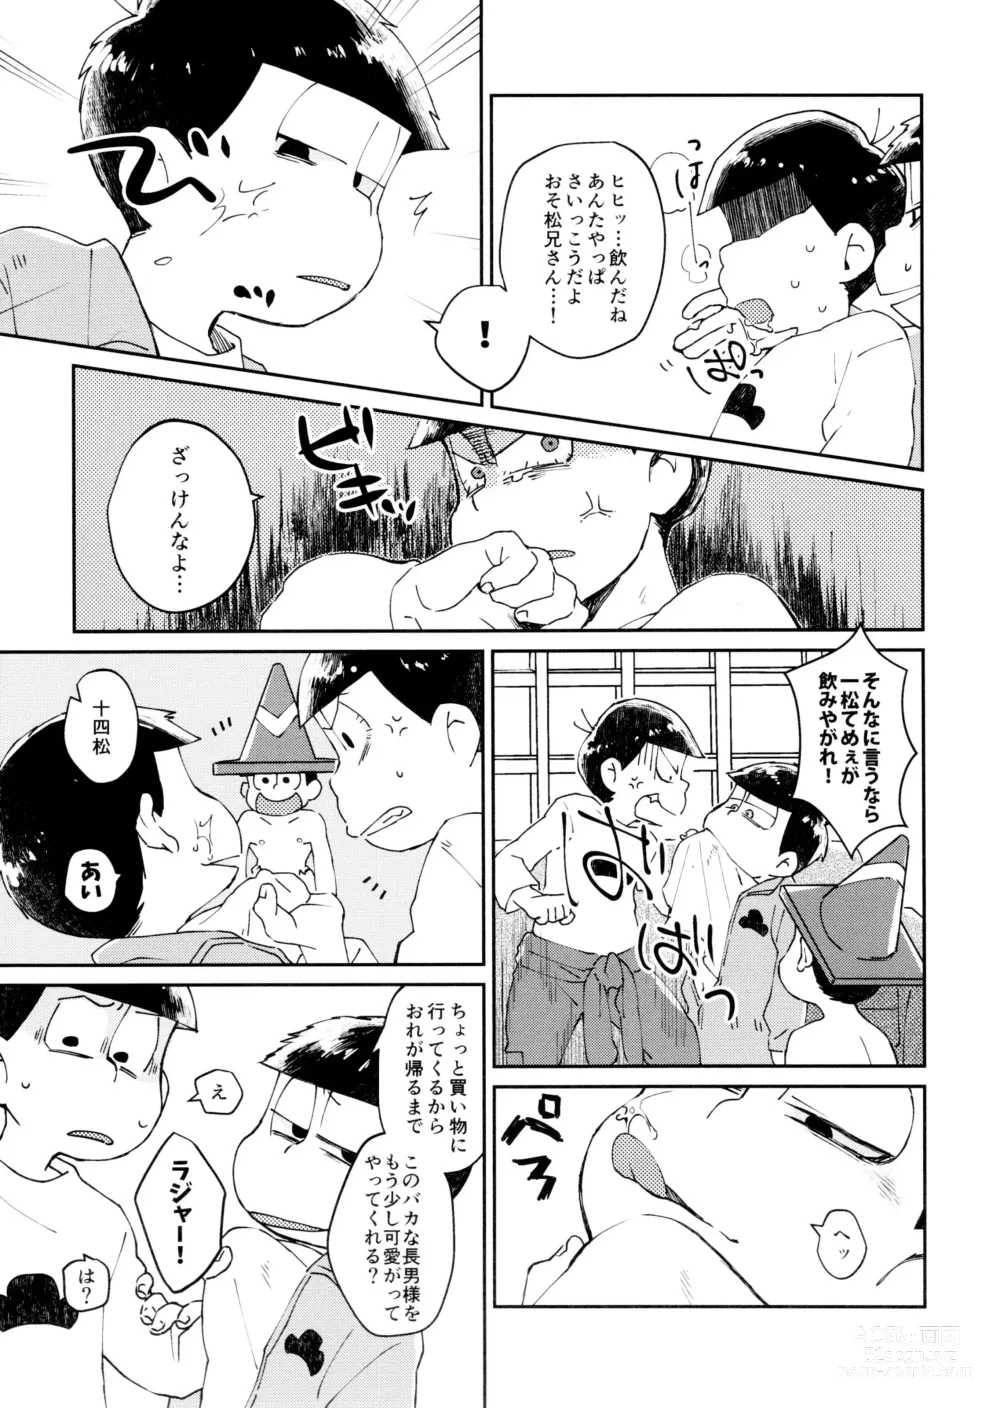 Page 13 of doujinshi Wild Coup dEtat